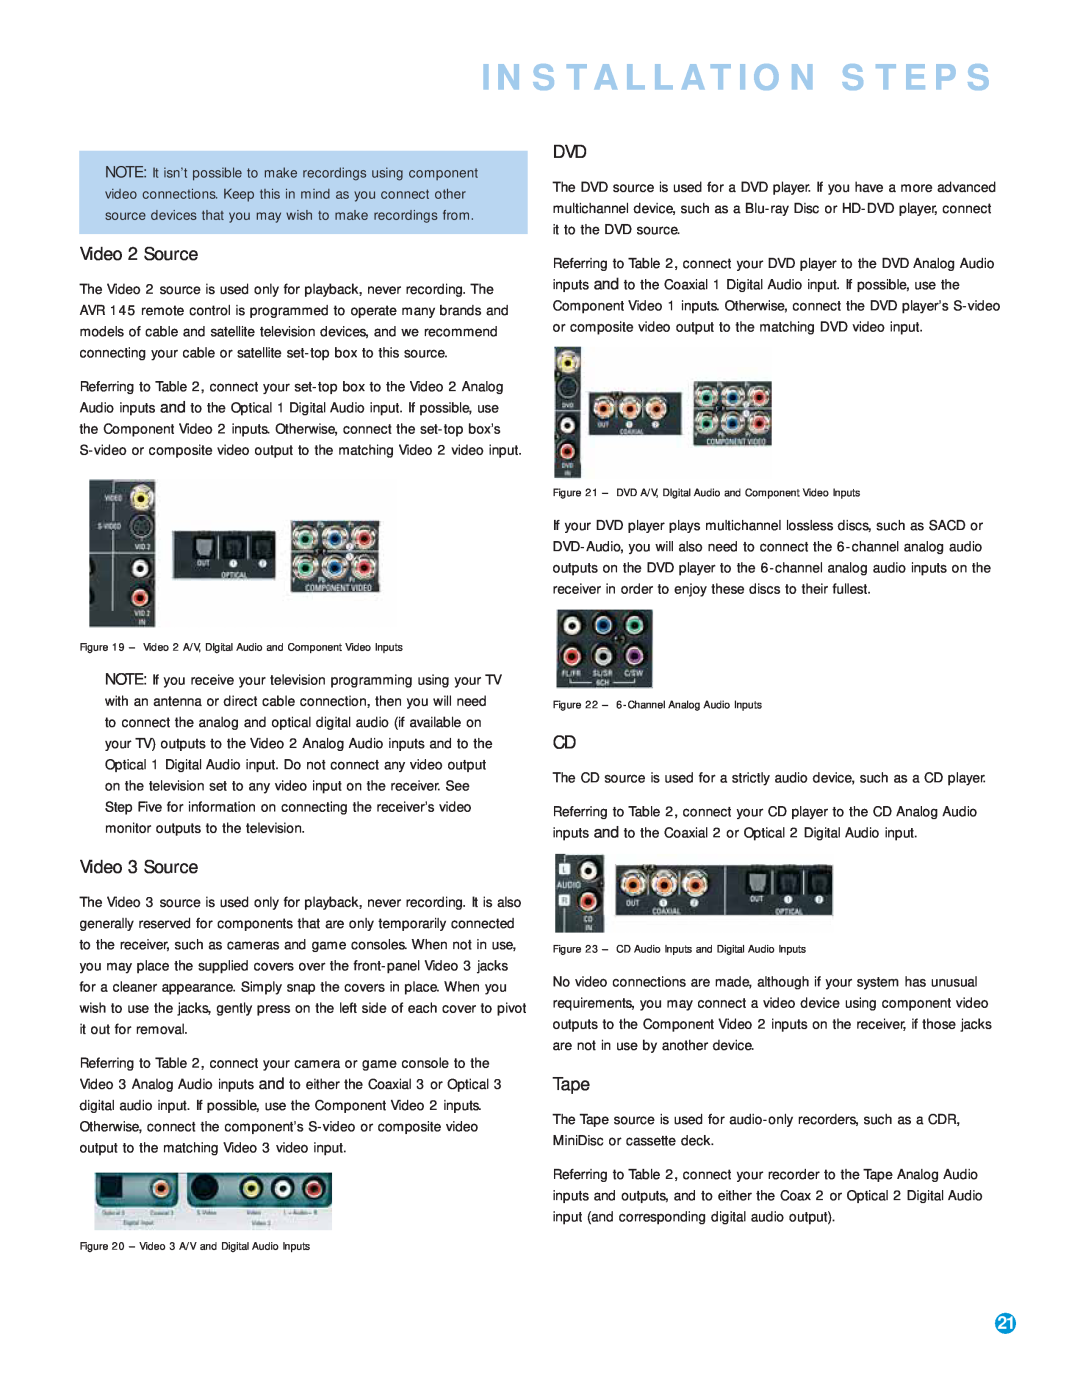 Harman-Kardon AVR 145 owner manual Installation Steps, Video 2 Source, Video 3 Source, Tape 